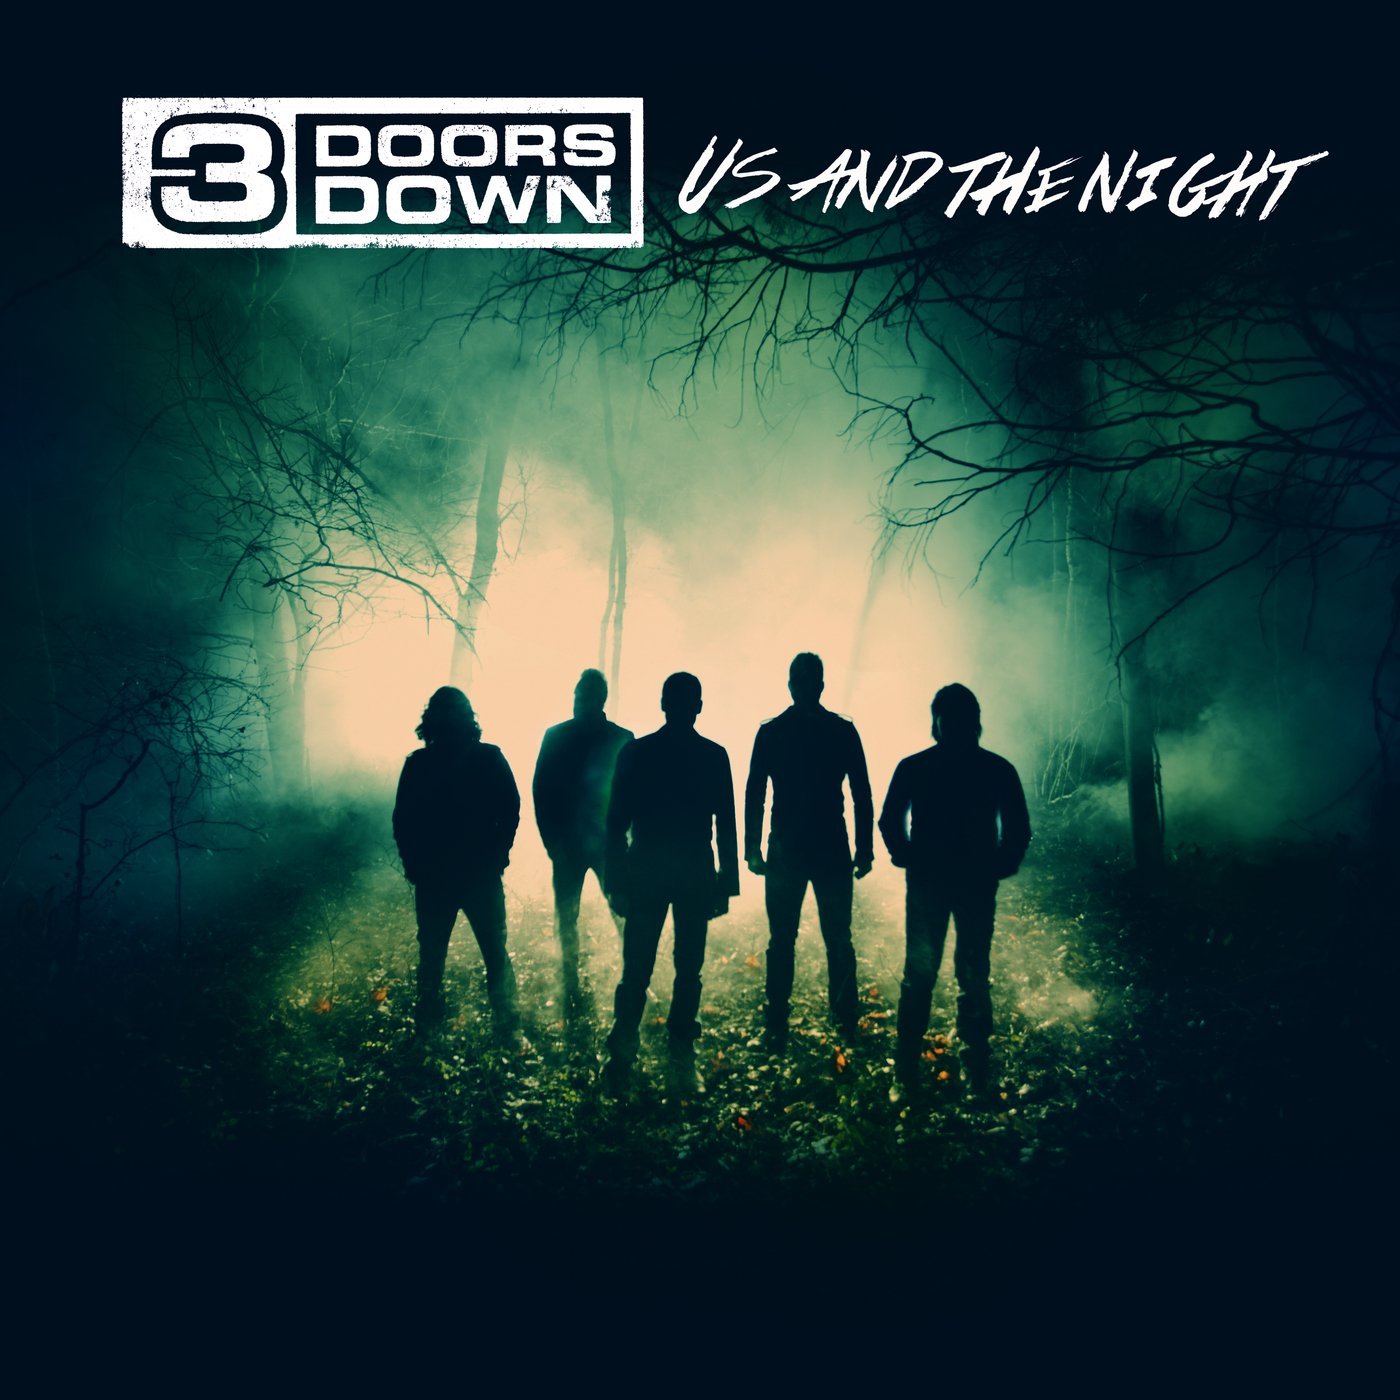 3 Doors Down – Us And The Night (2016) [Qobuz FLAC 24bit/96kHz]